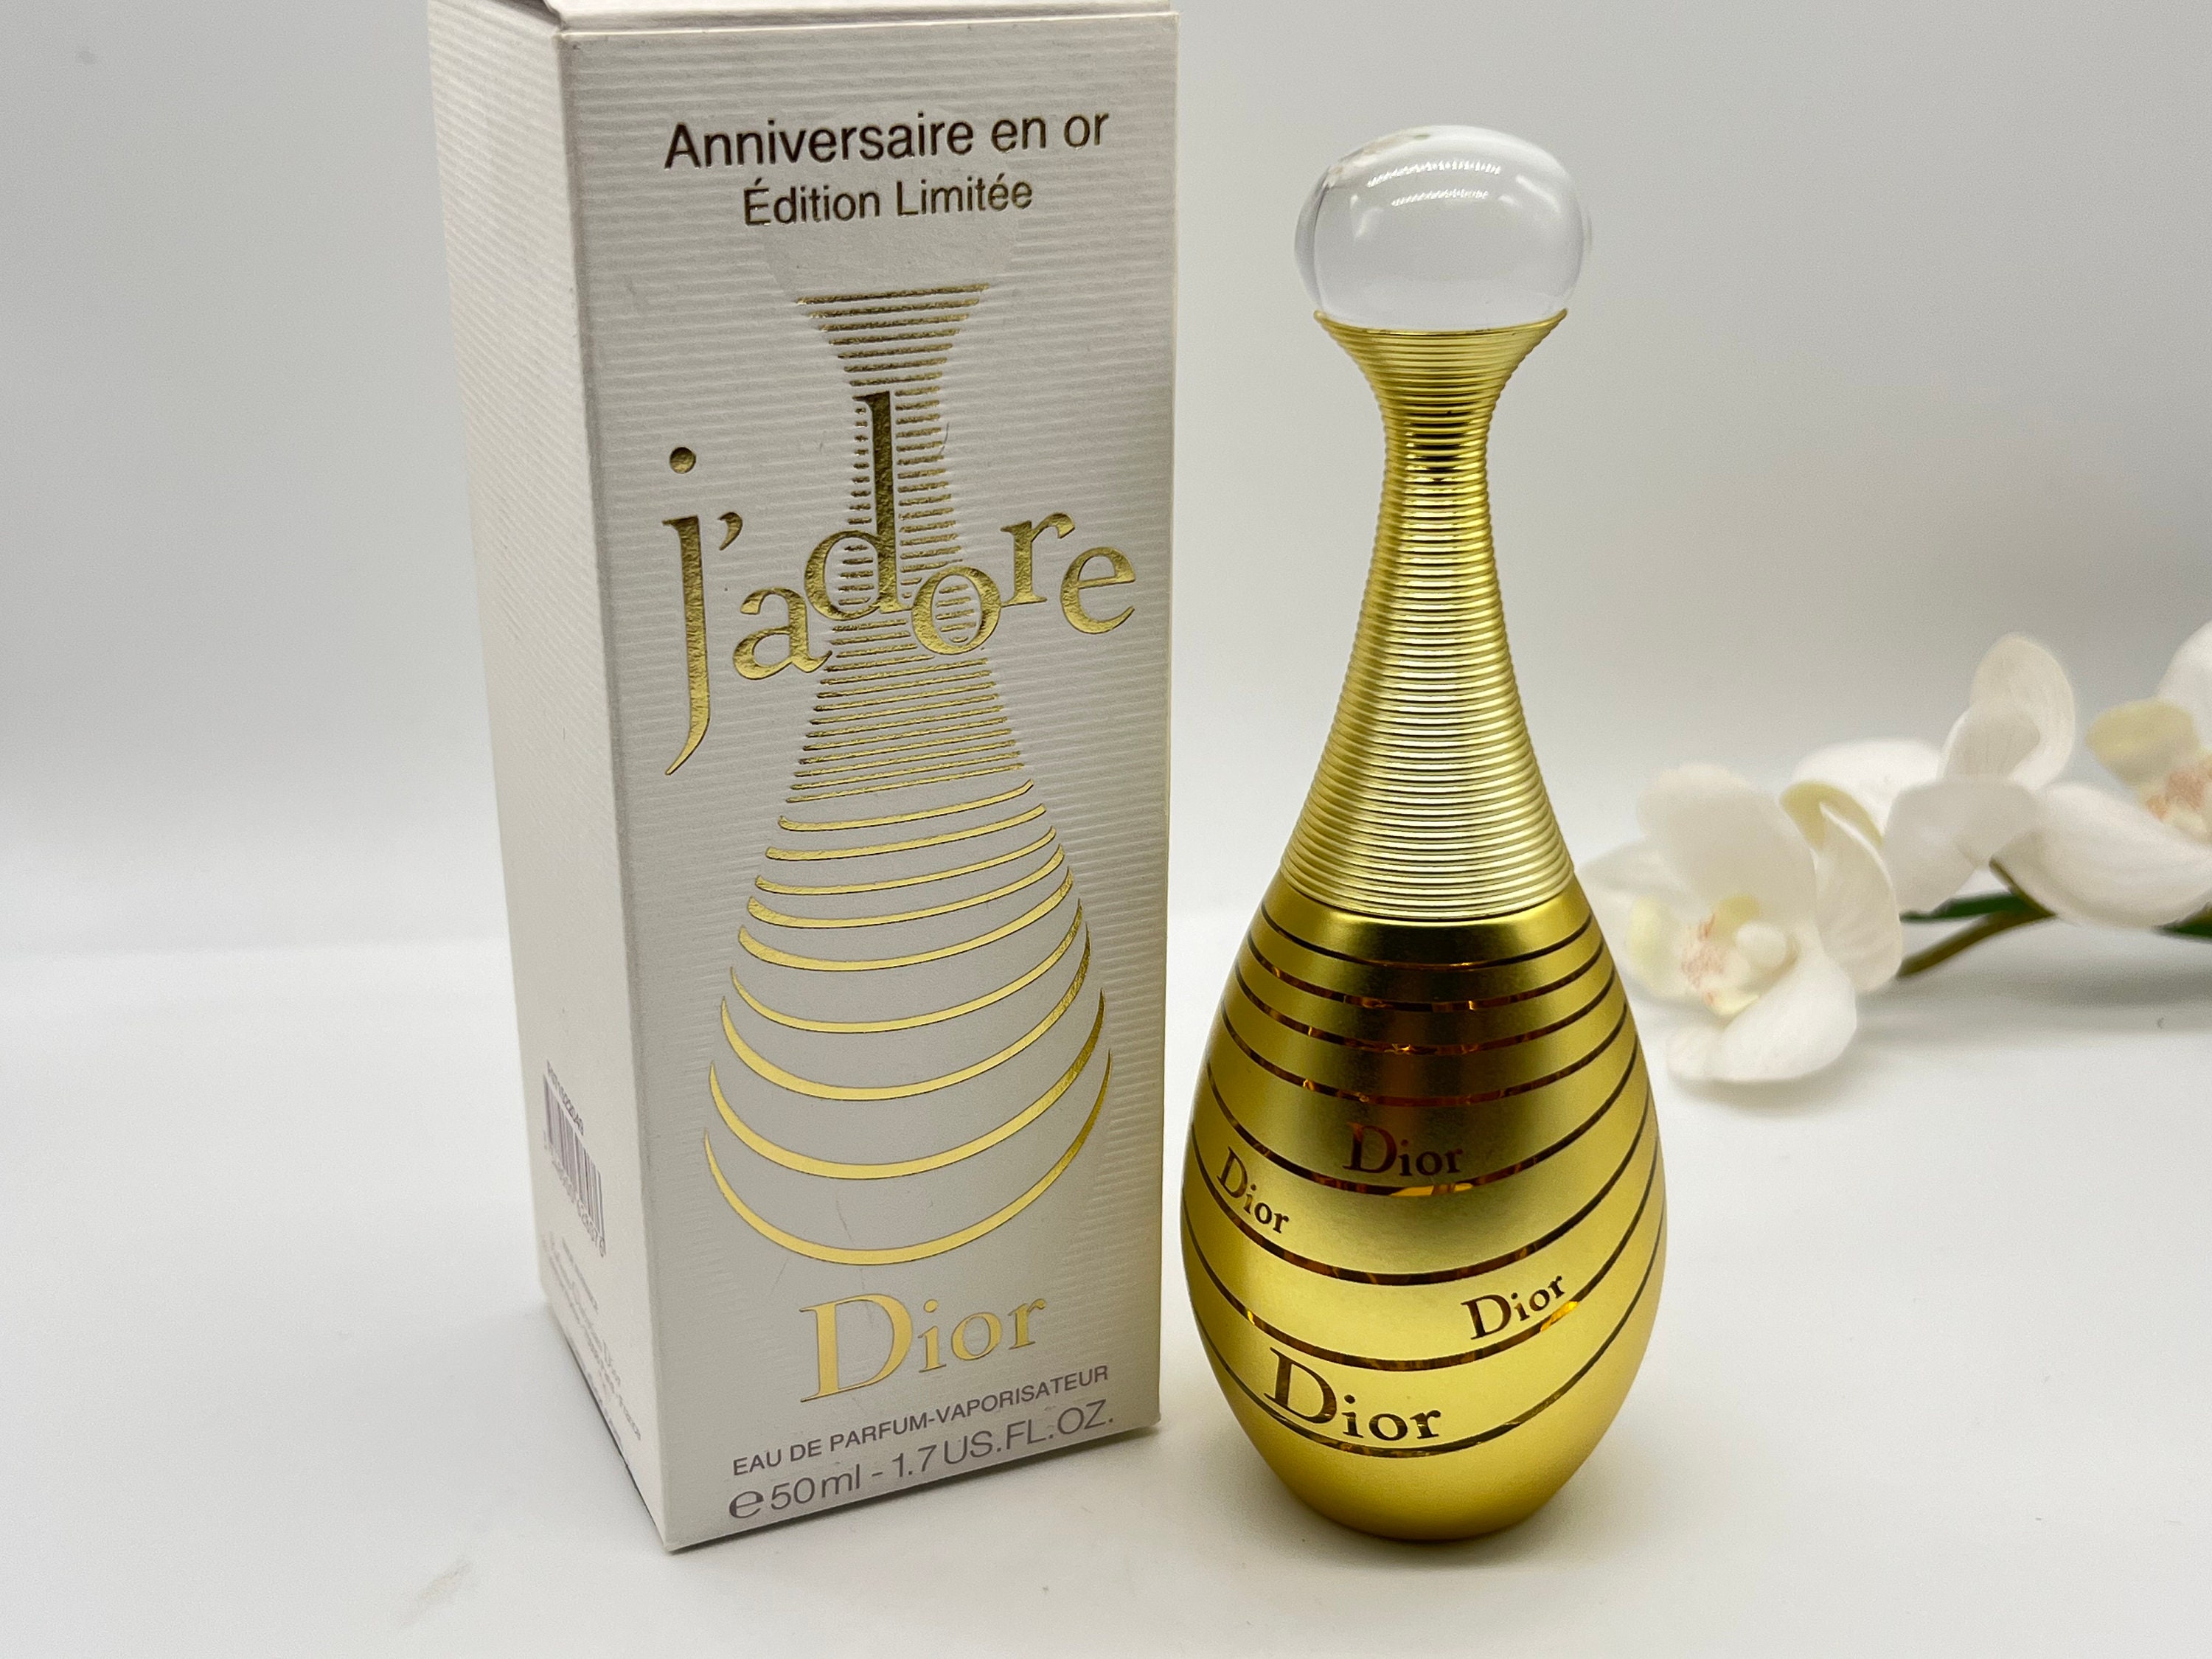 J'adore Dior Golden Anniversary Limited Edition 1999 Eau 